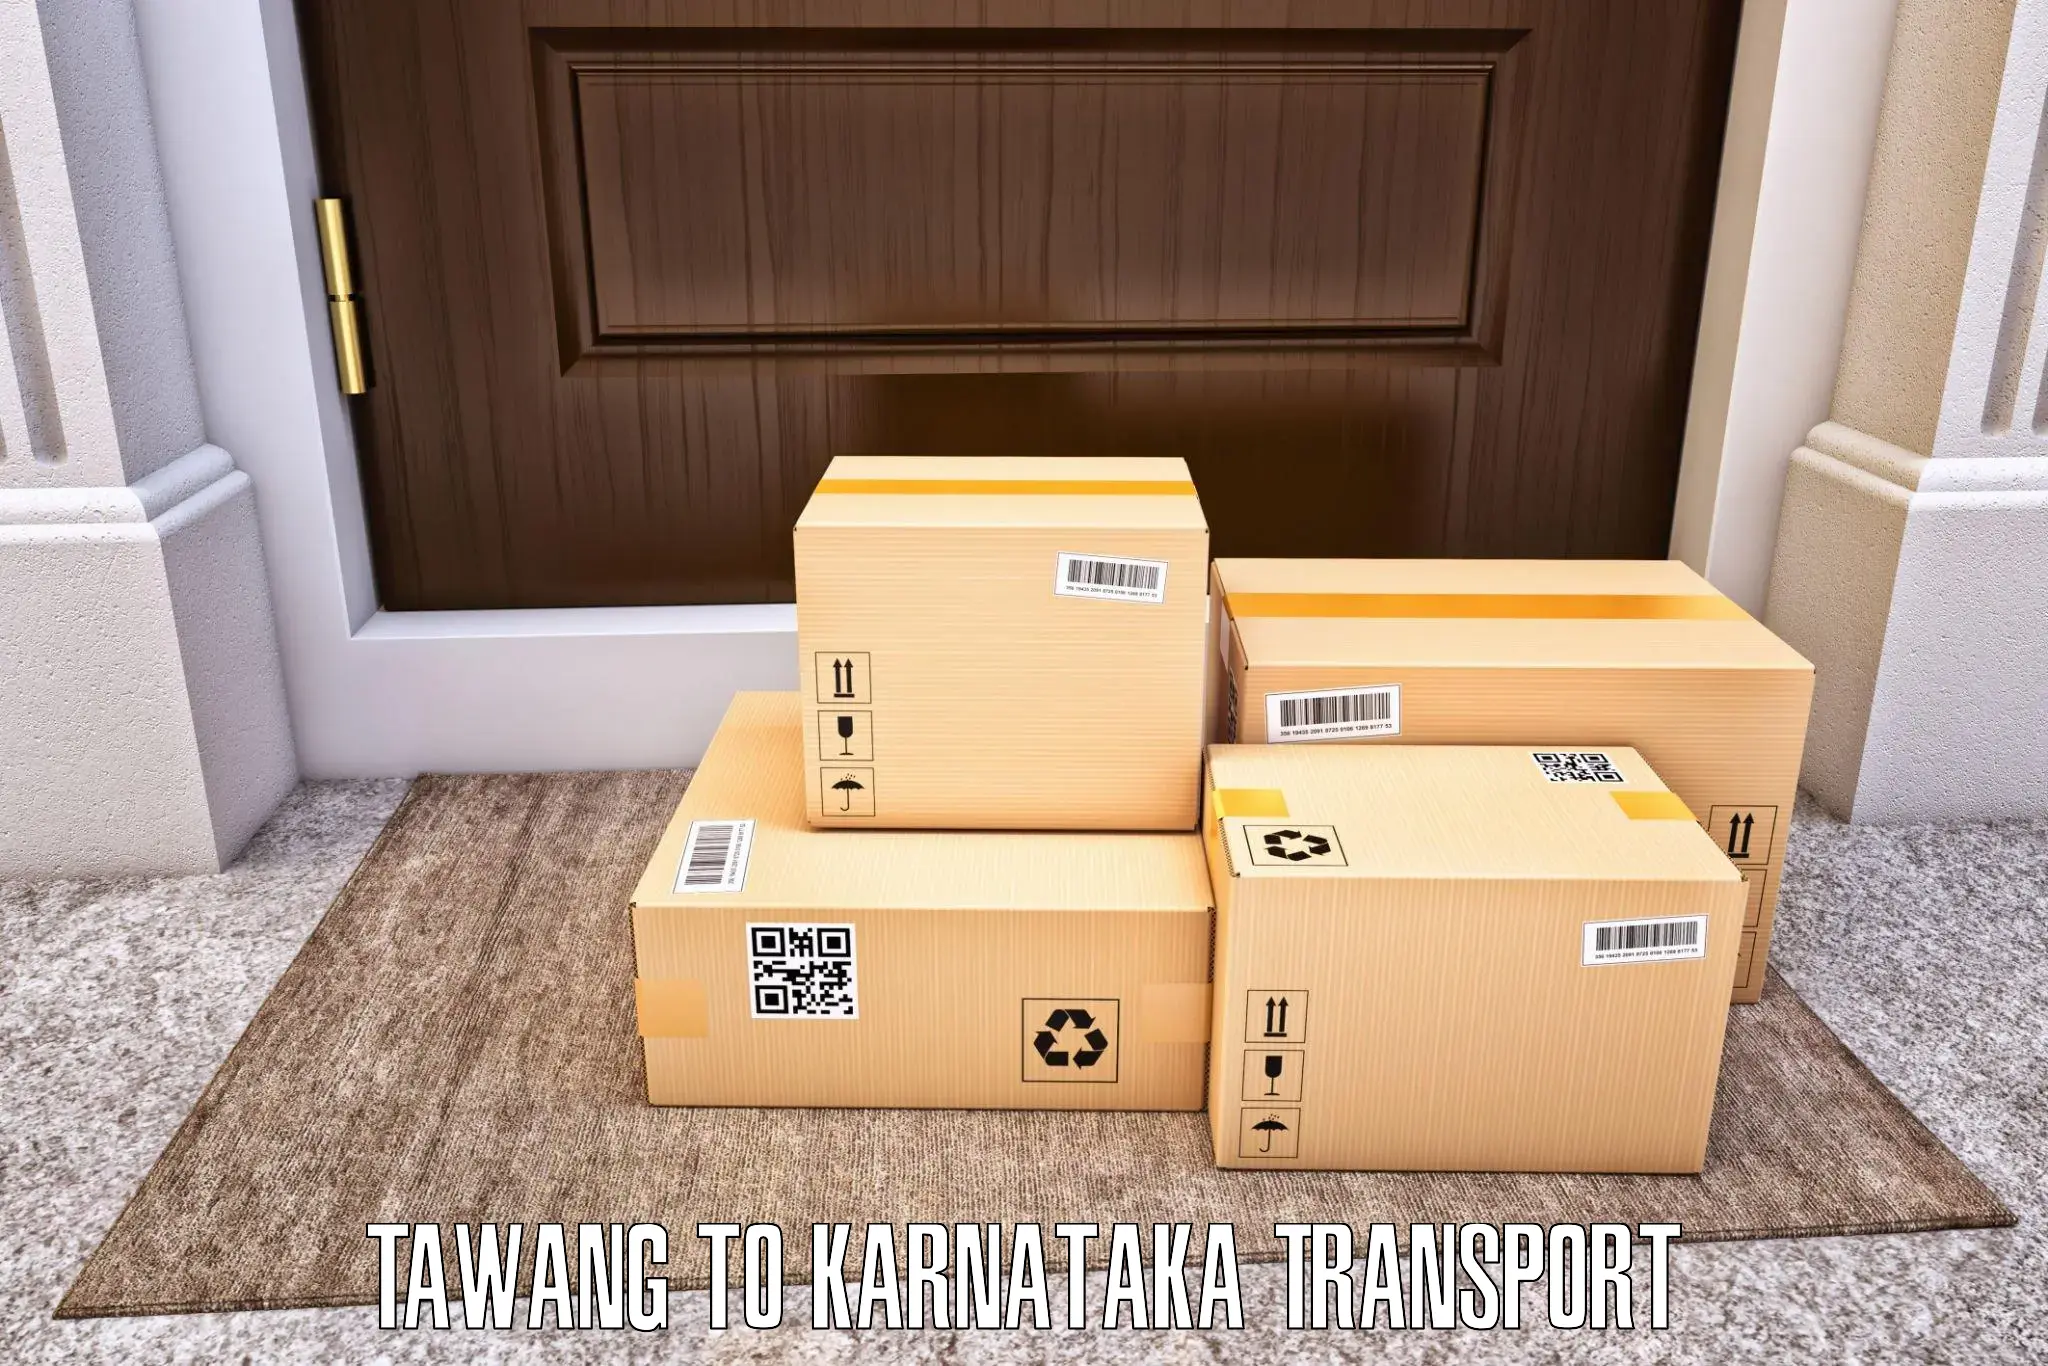 Vehicle transport services Tawang to Hoovina Hadagali